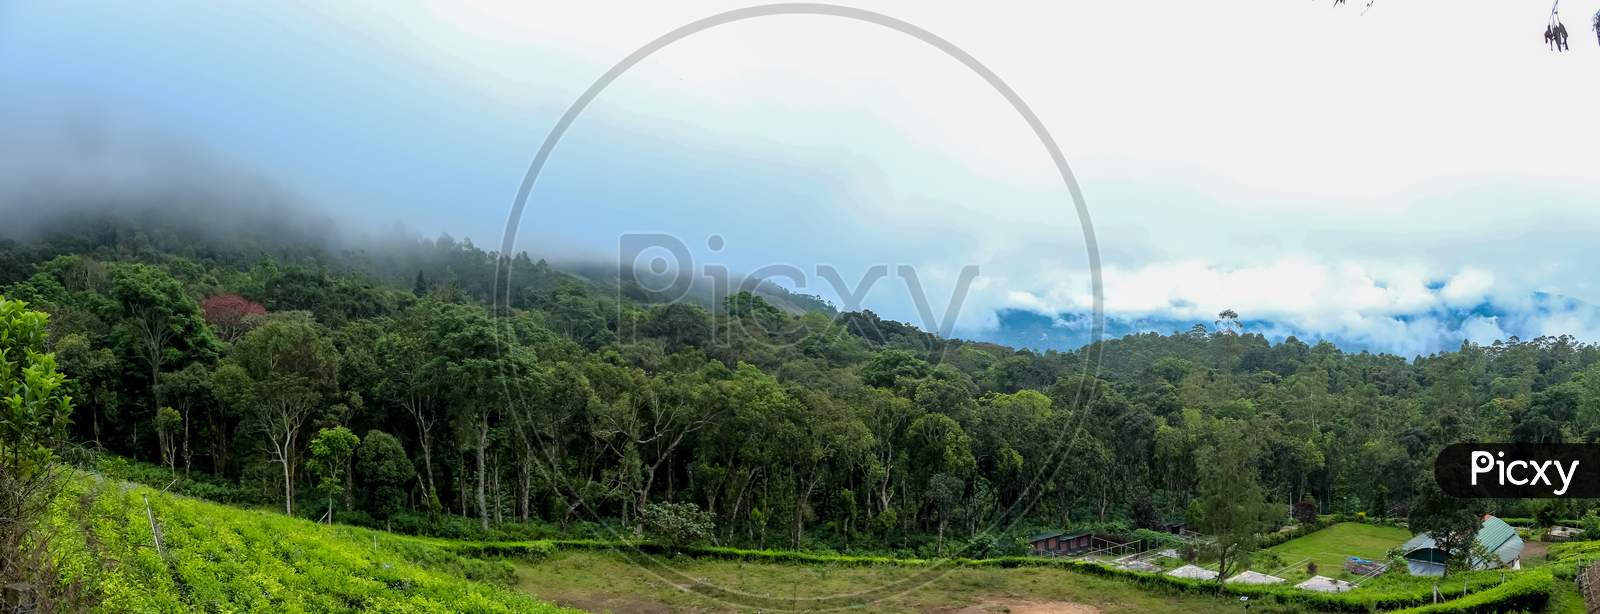 Panorama View Munnar Garden And Tea Plantation . Tea Plantations In Munnar, Kerala, India. Panorama Stock Images